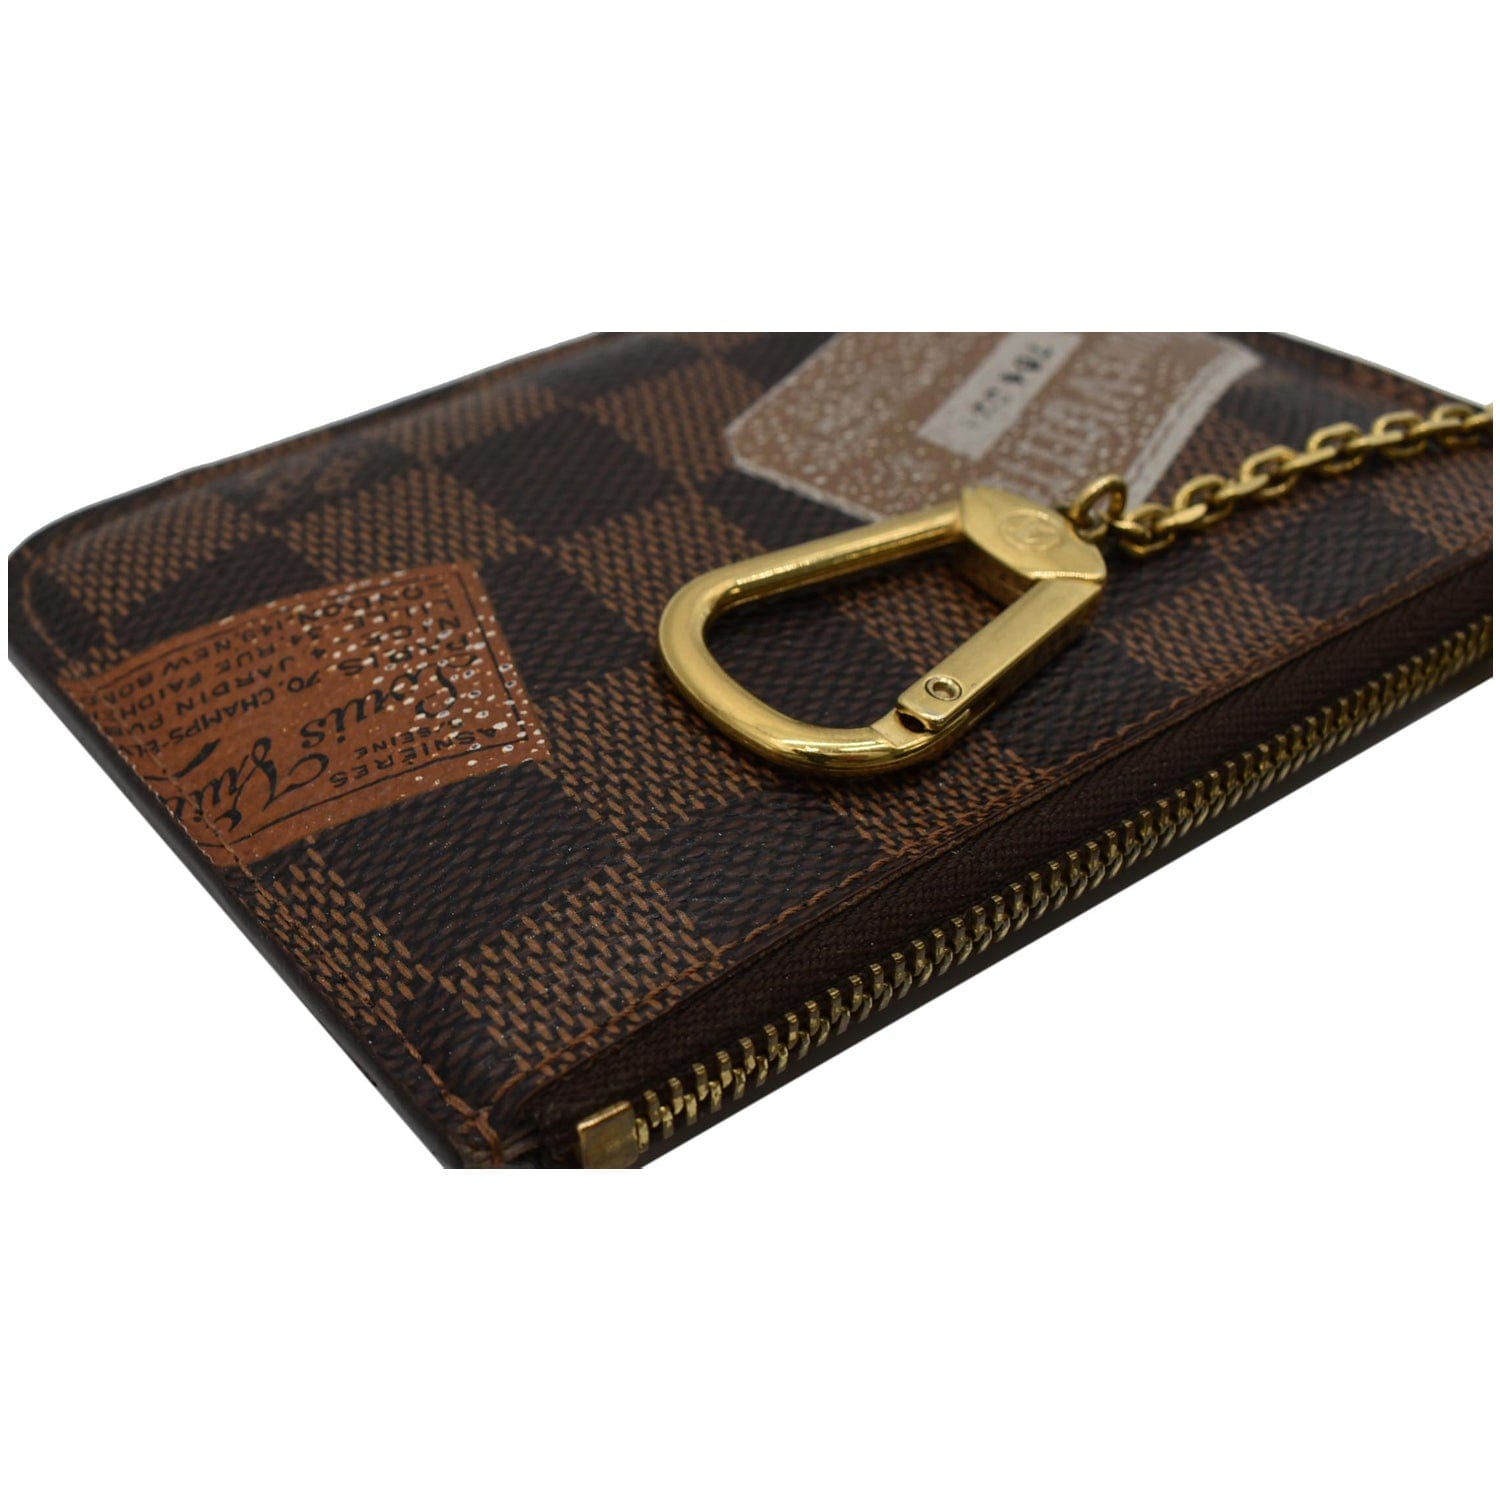 Louis Vuitton Damier Ebene Key Pouch (CA4059) – Luxury Leather Guys